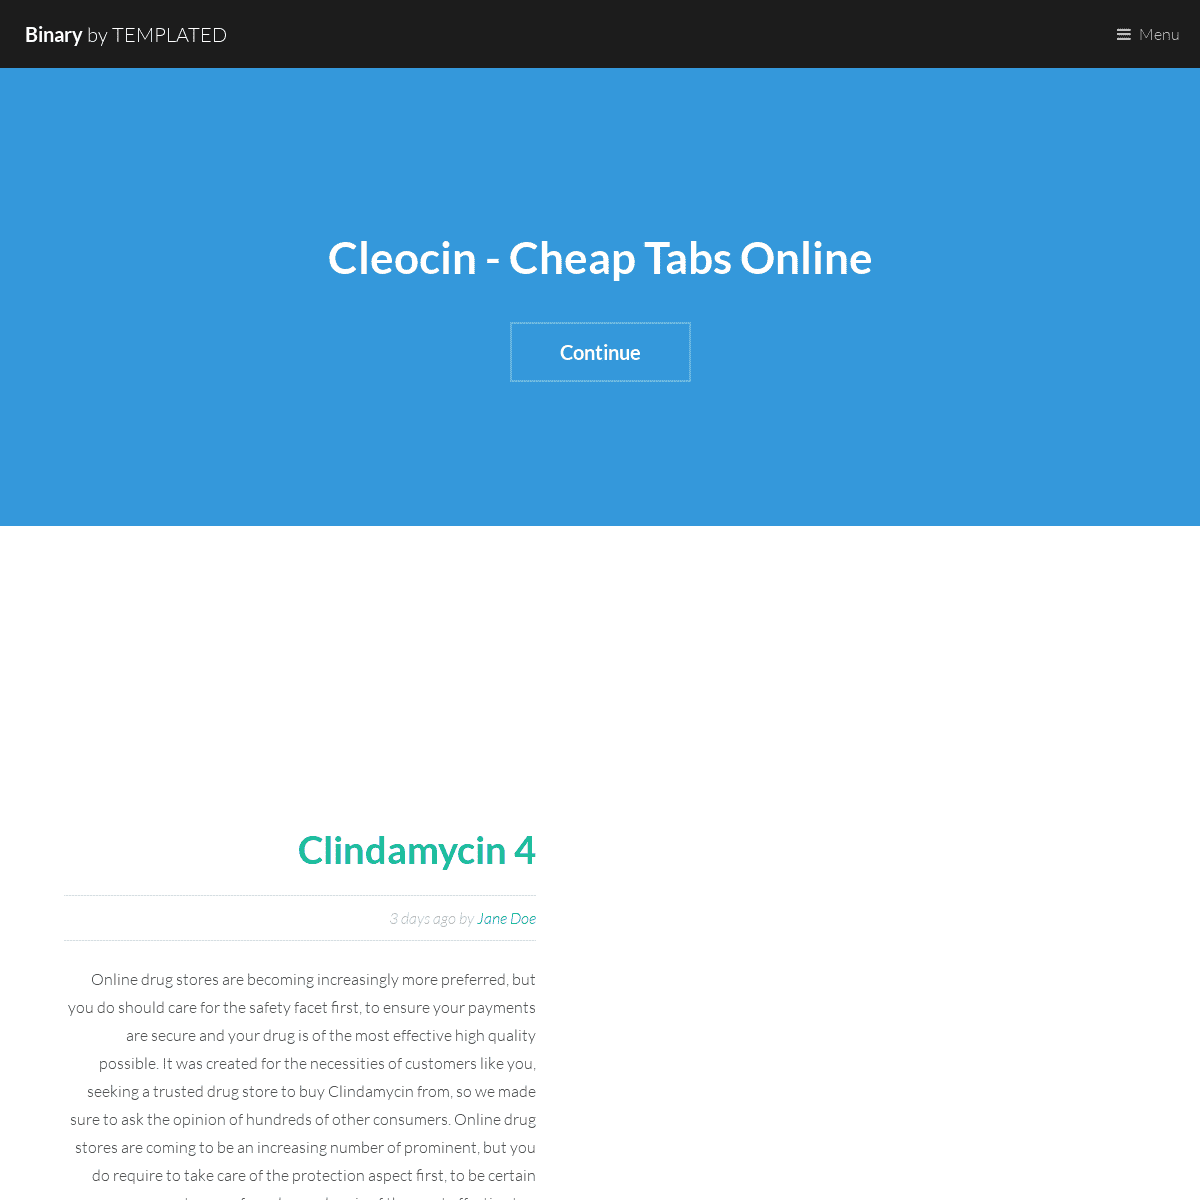 A complete backup of https://cleocinclindamycin.com